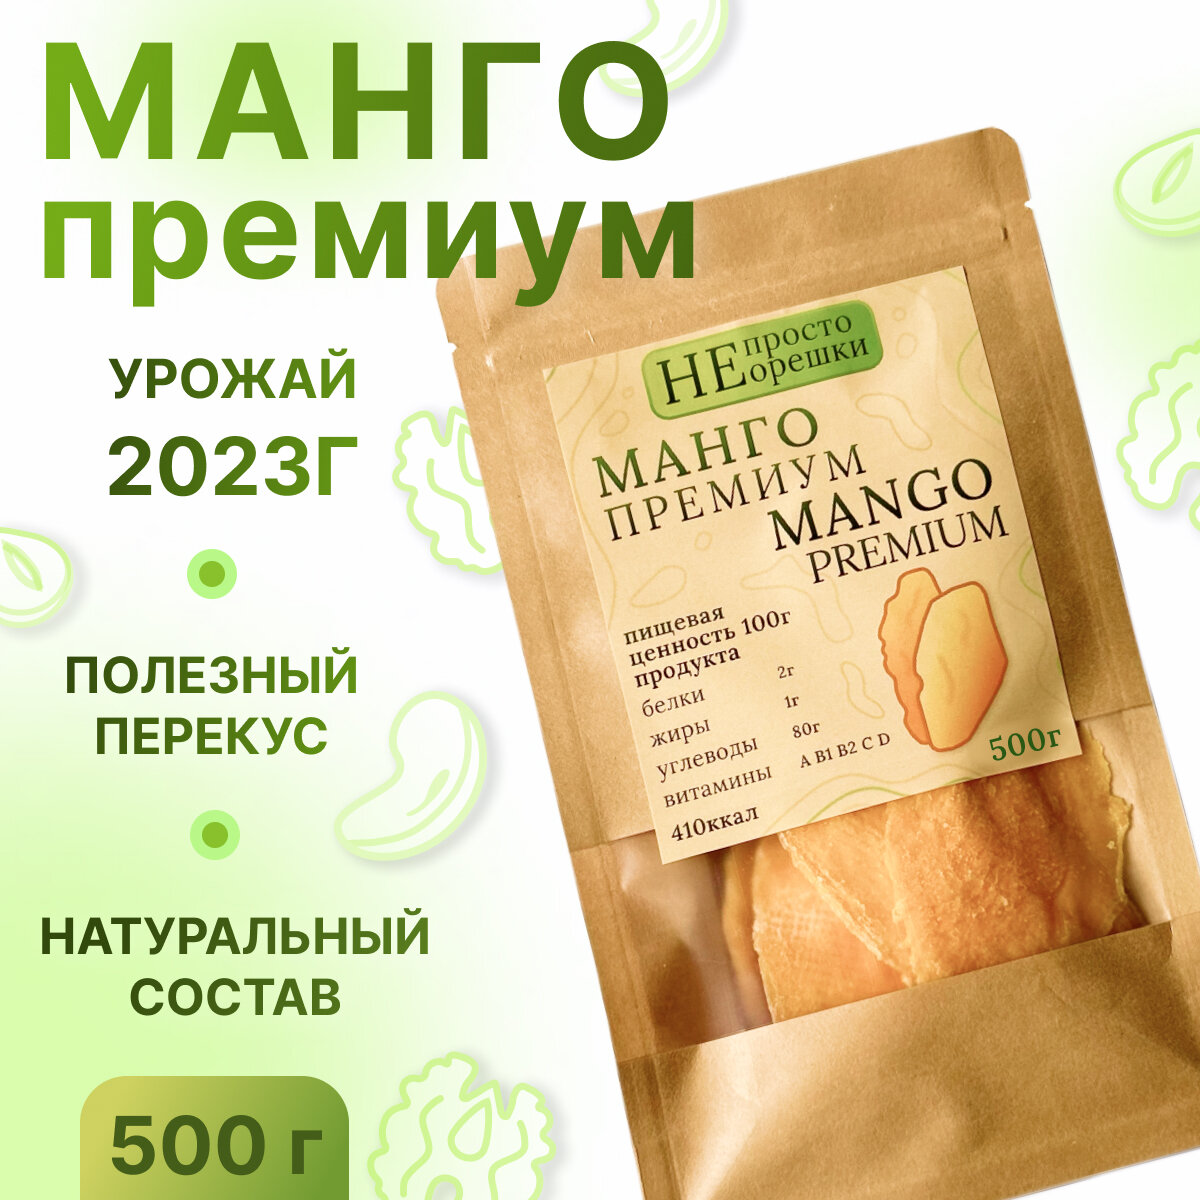 Манго сушеное натуральное, без сахара, НЕ просто орешки, 500 гр